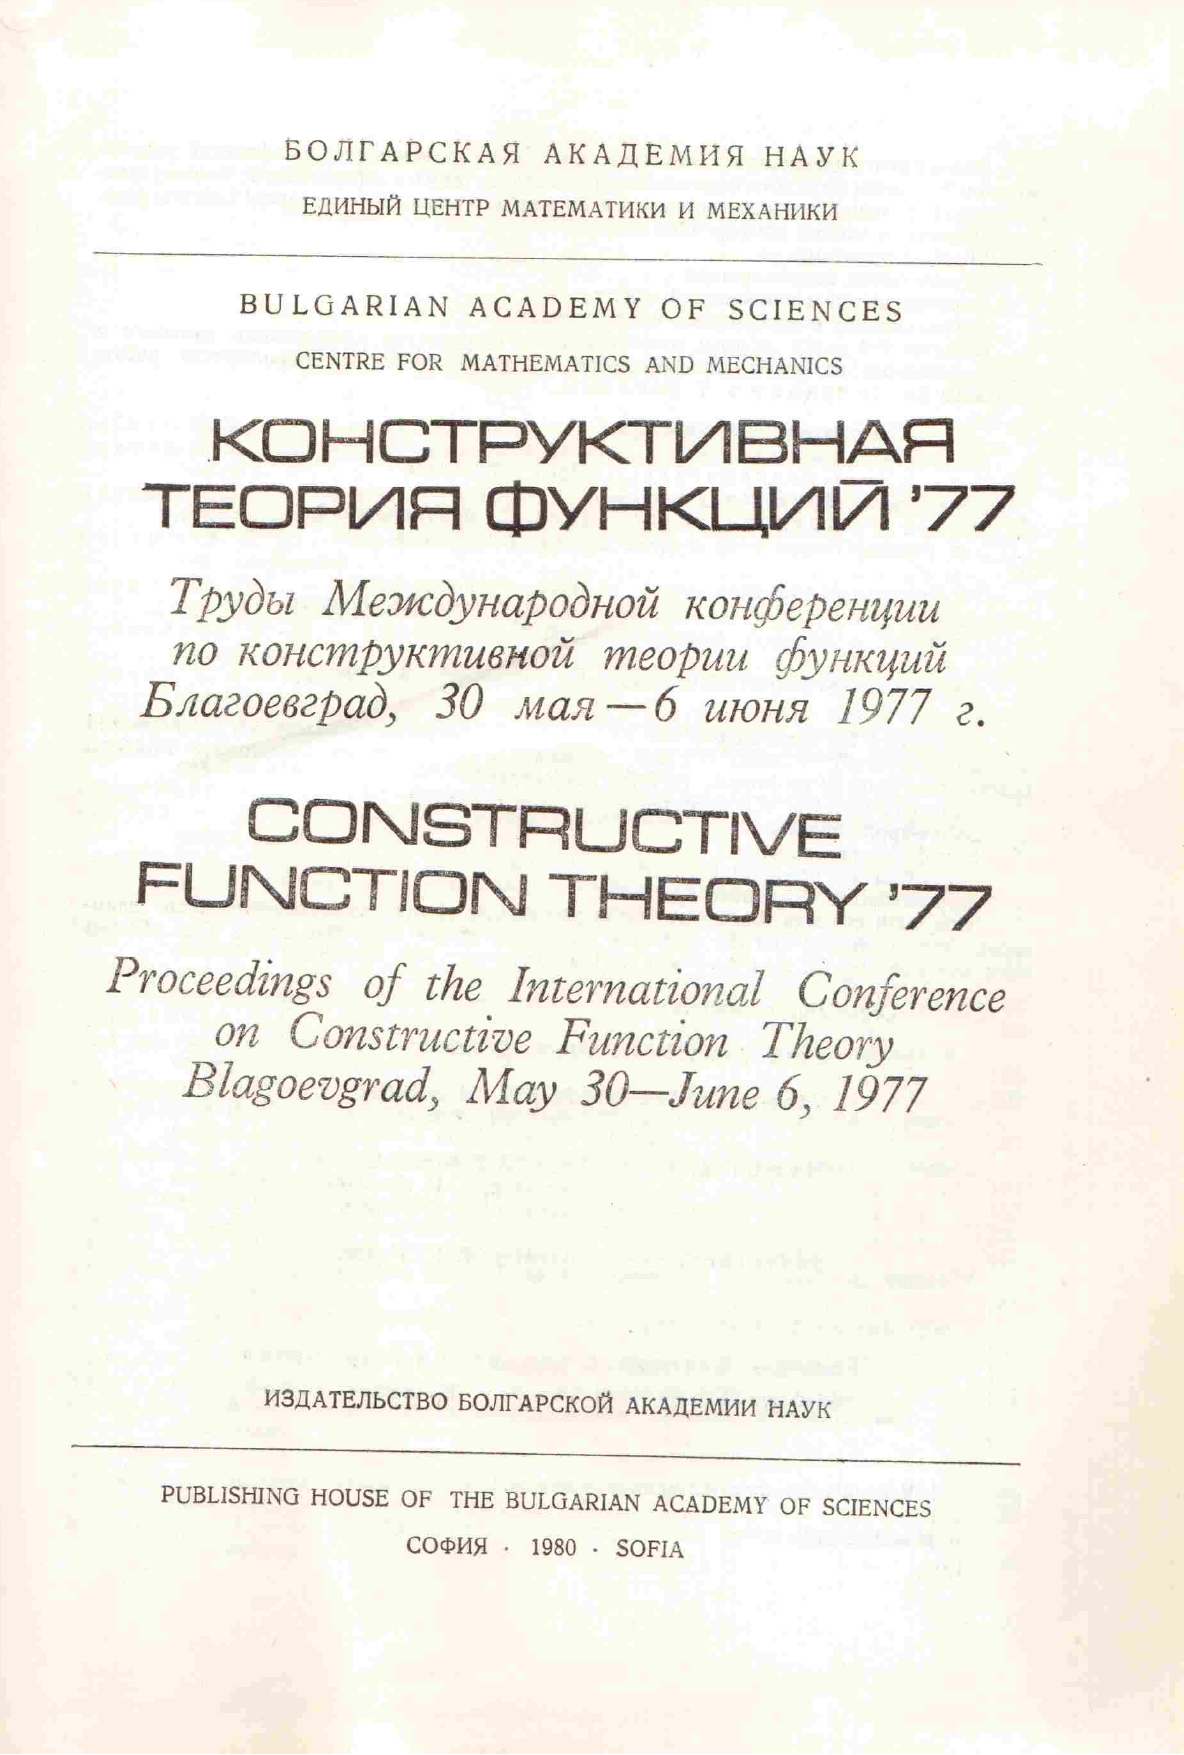 CTF-1977